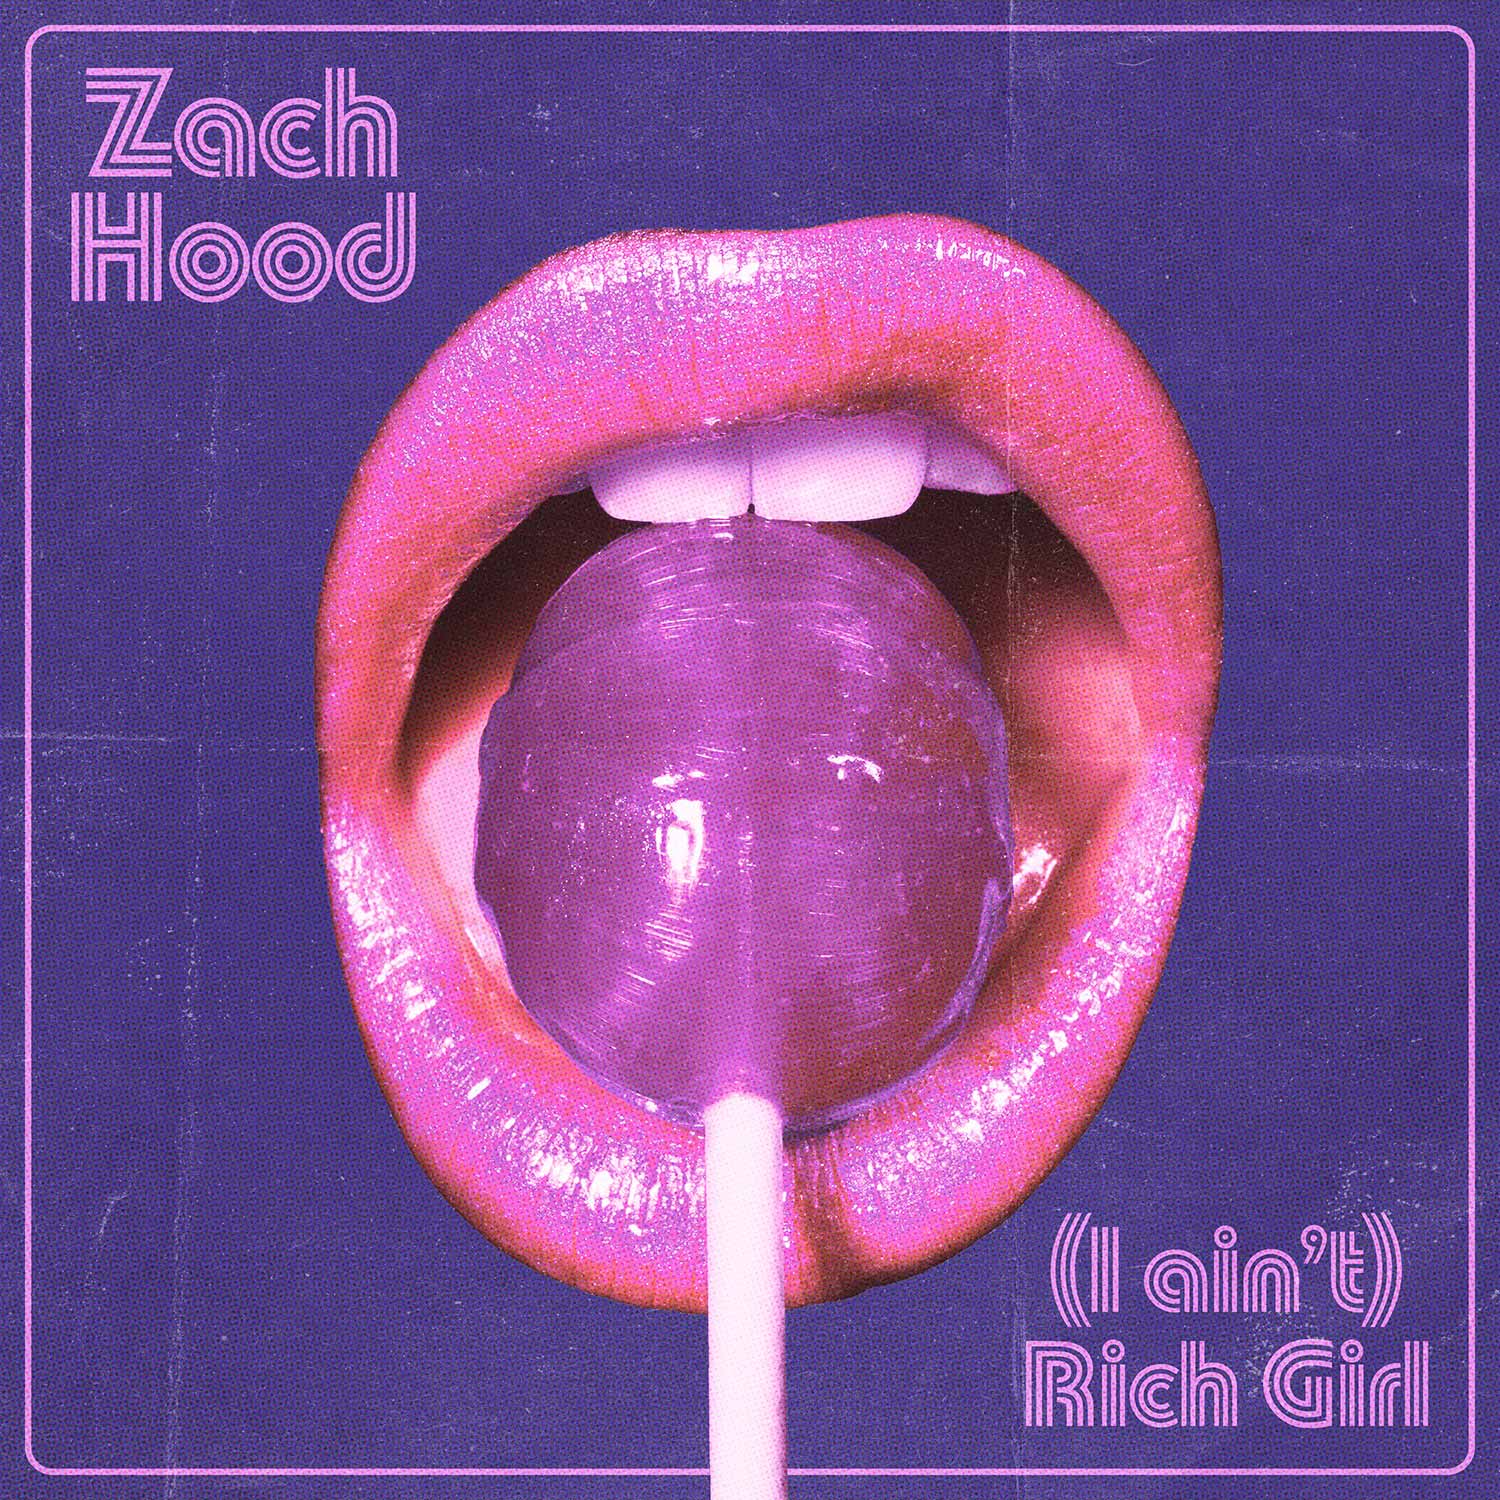 Zach Hood cover